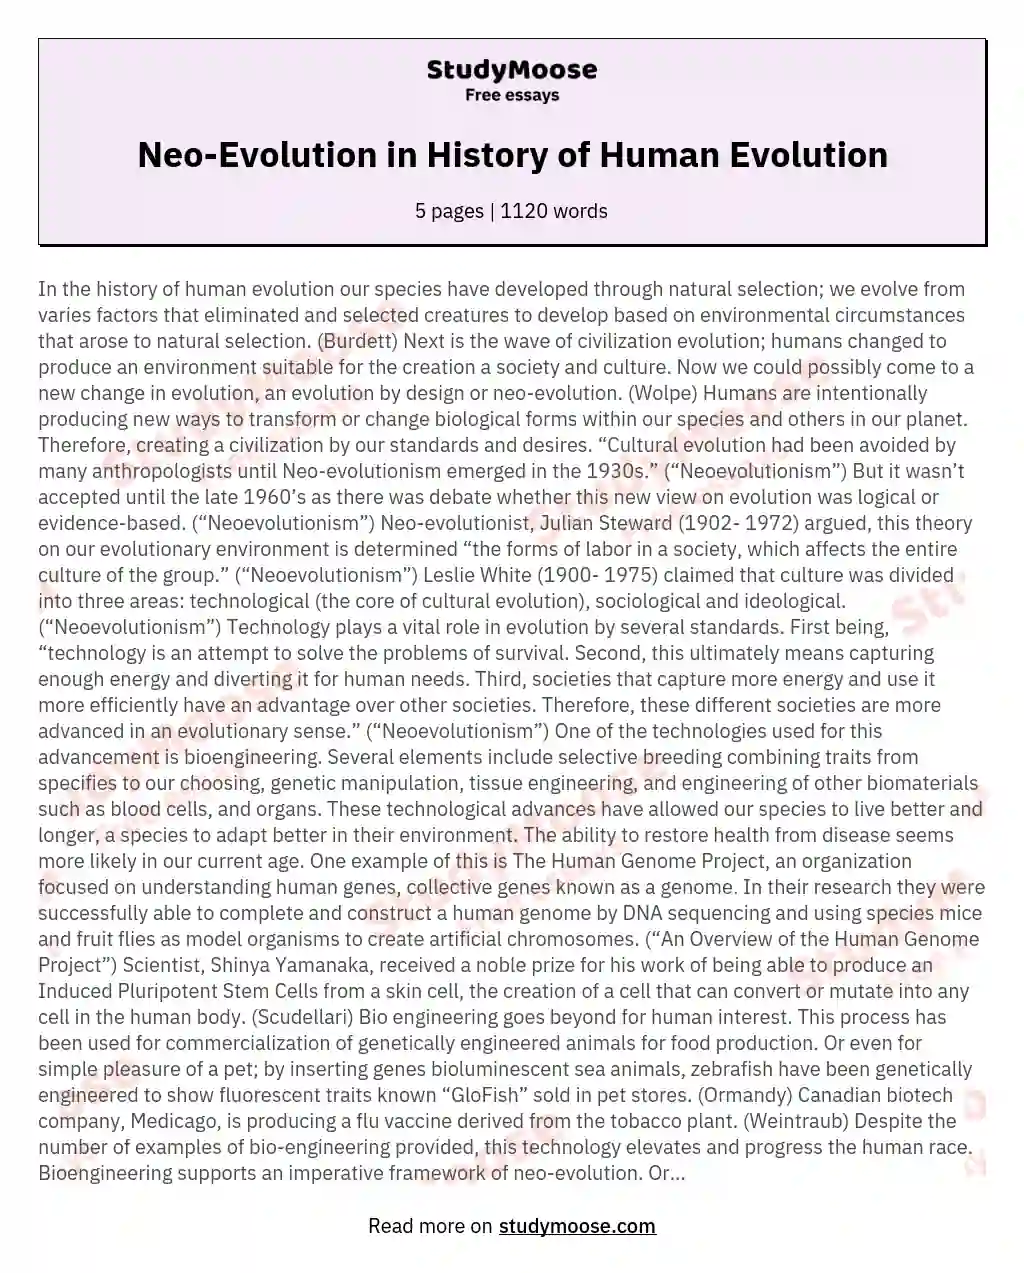 Neo-Evolution in History of Human Evolution essay